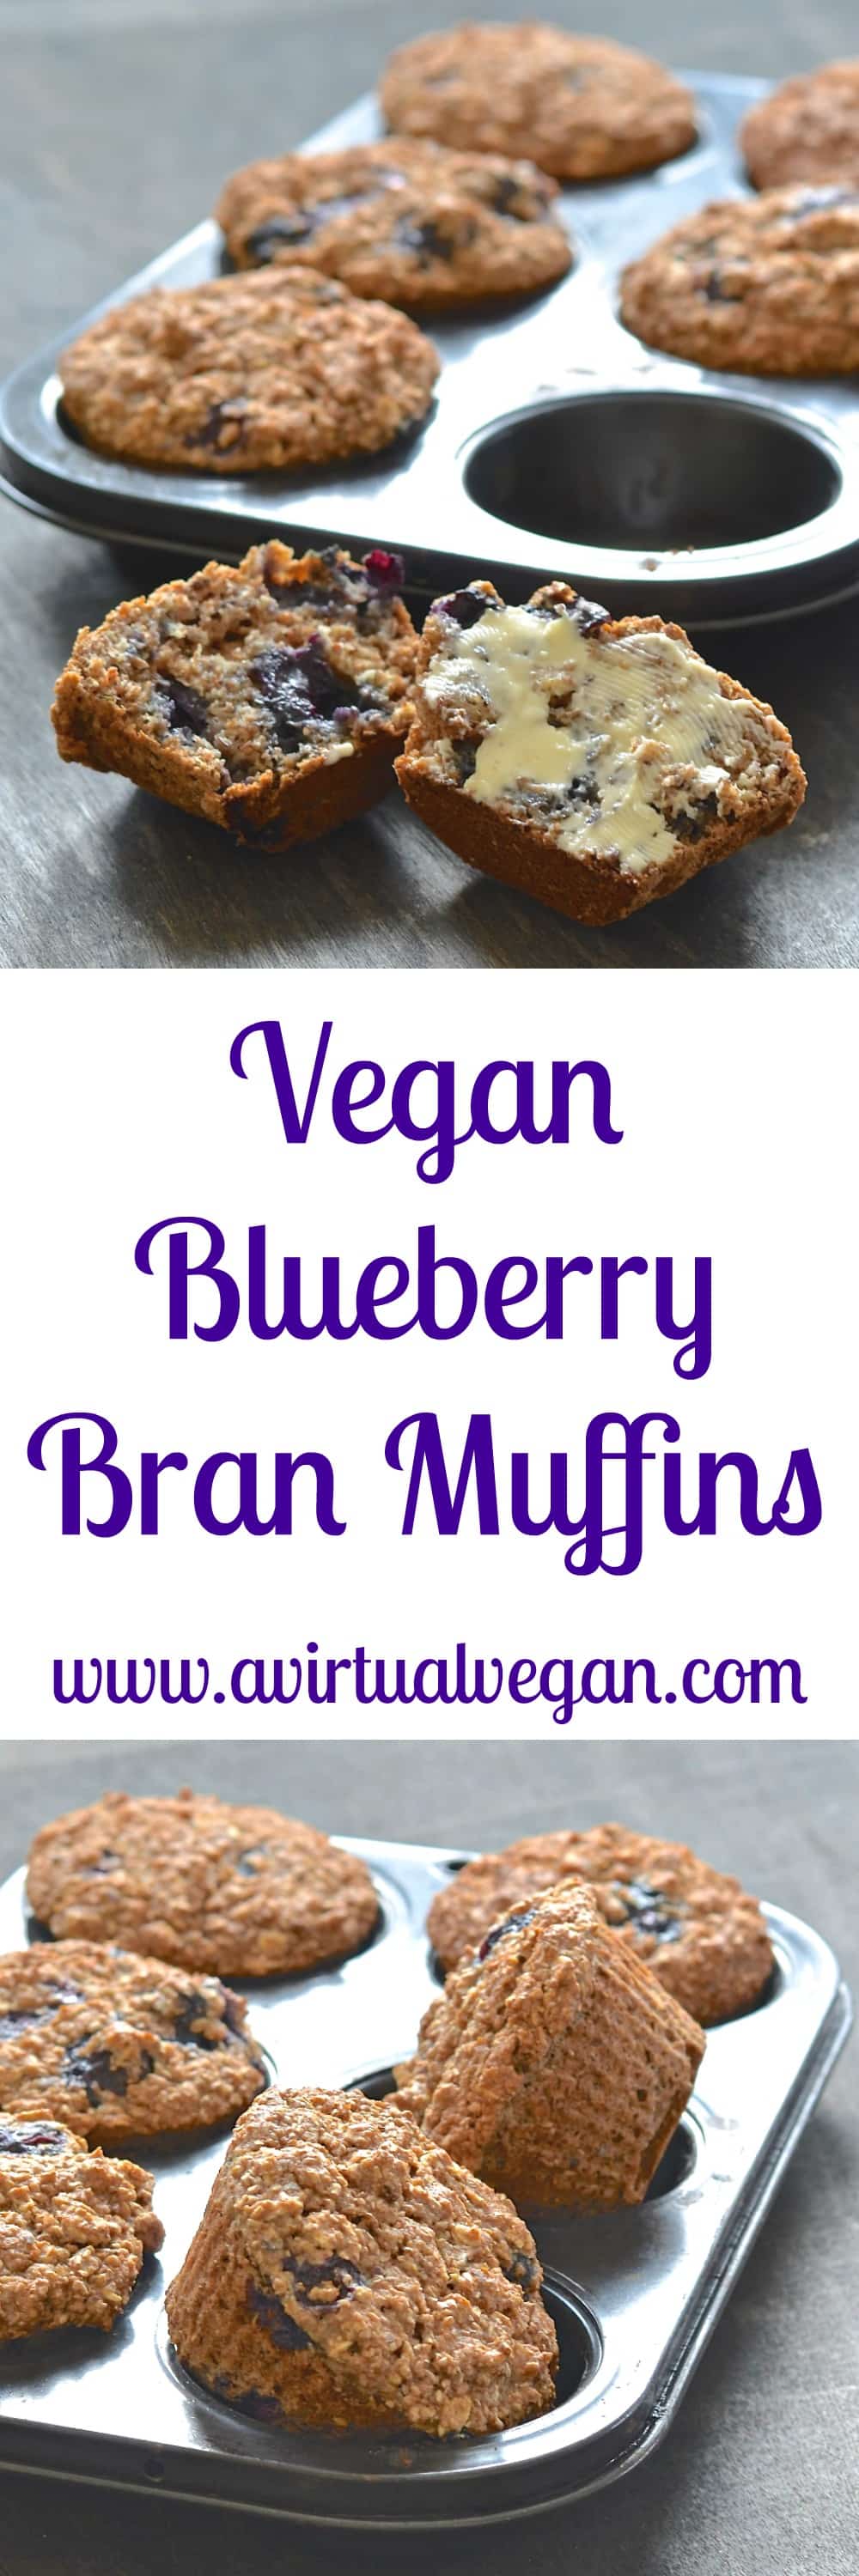 Blueberry Bran Muffins - Vegan & Oil-free - A Virtual Vegan